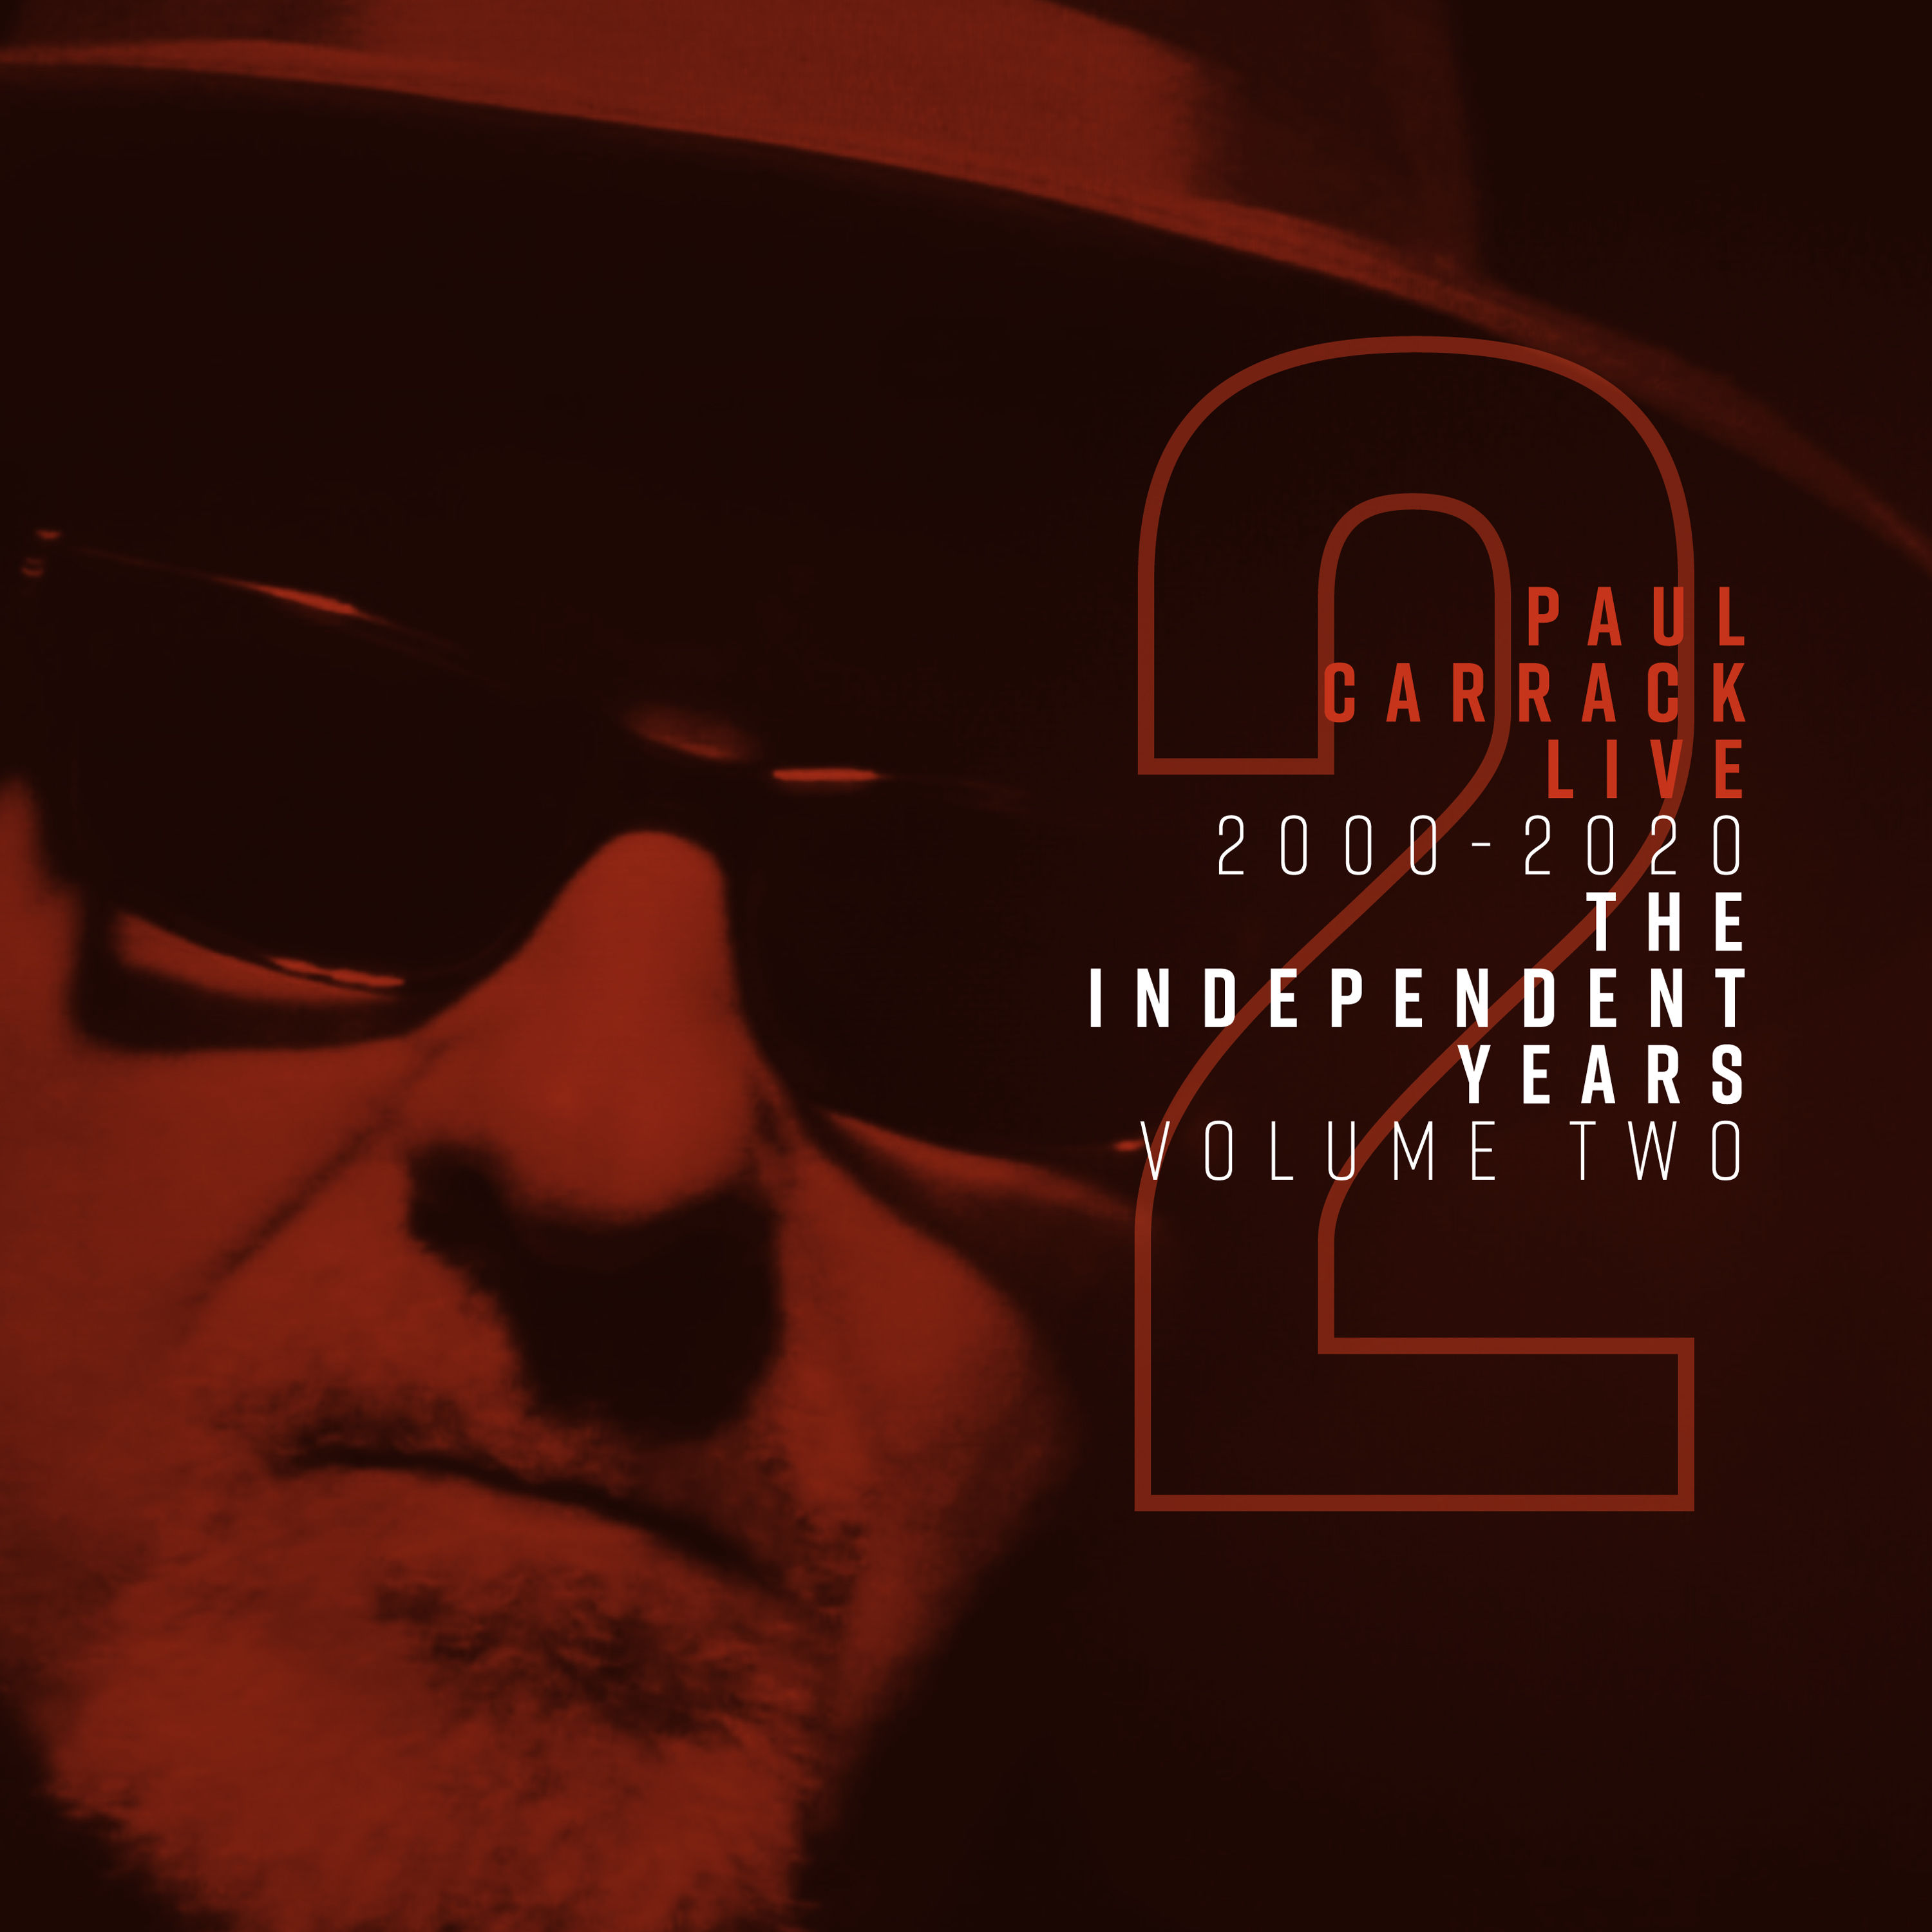 Paul Carrack - Paul Carrack Live: The Independent Years, Vol. 2 (2000-2020) (2020) [FLAC 24bit/44,1kHz]